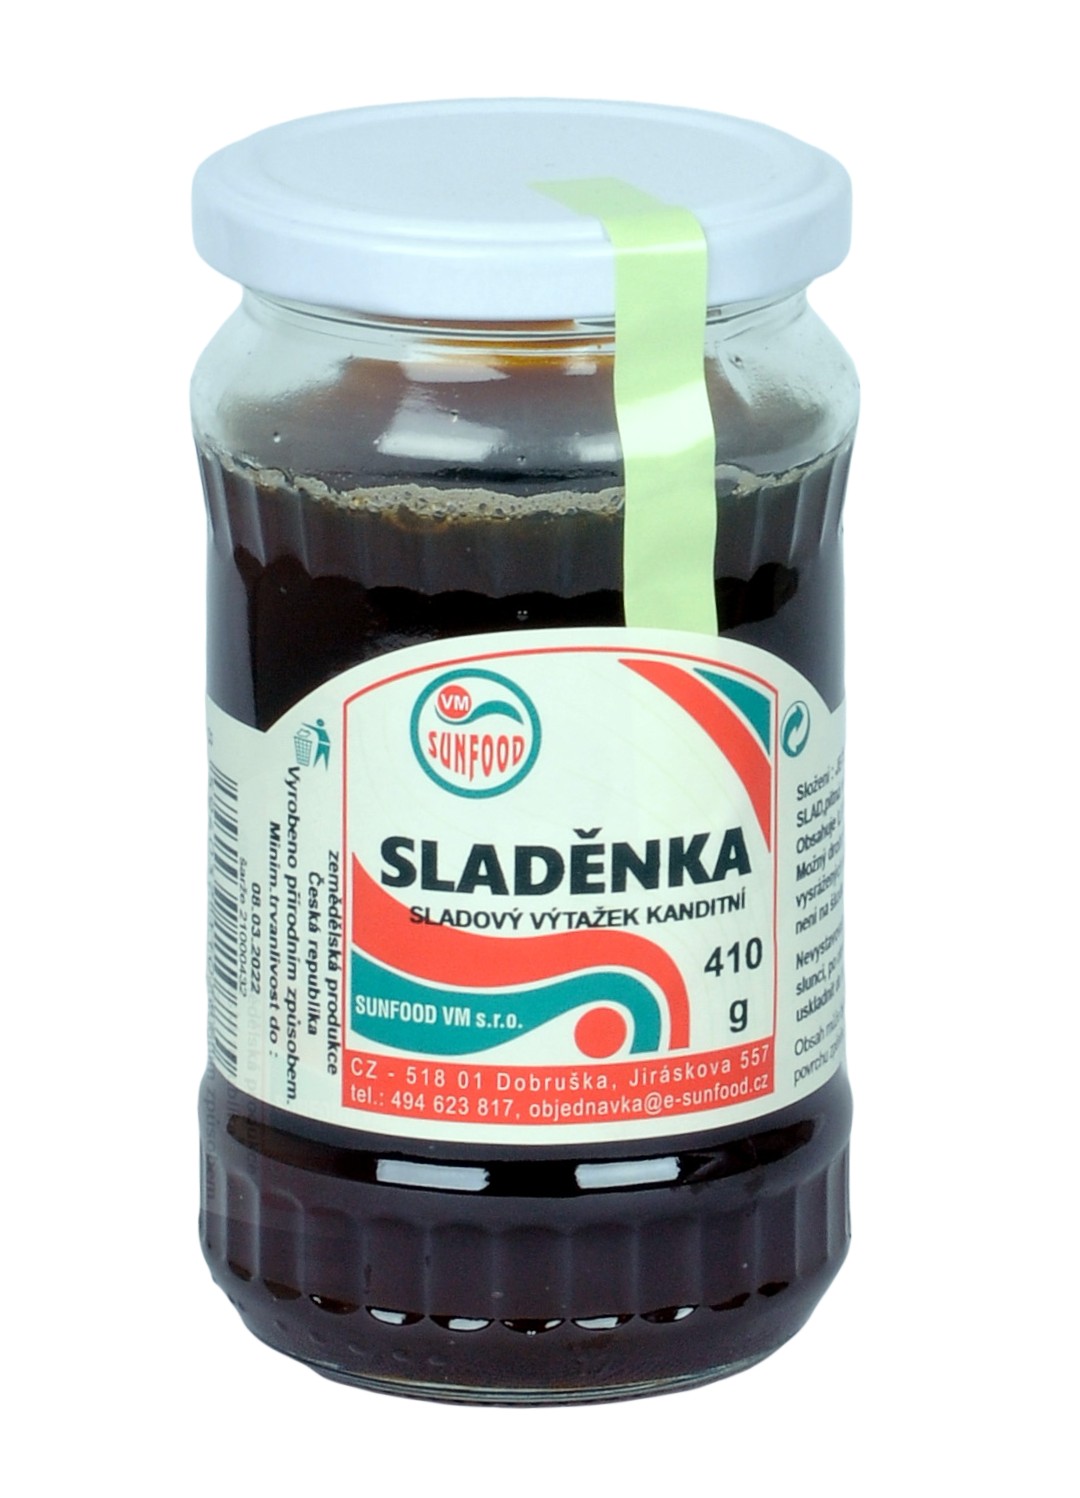 Sunfood Sladěnka - ječmenný slad, sklo 410g